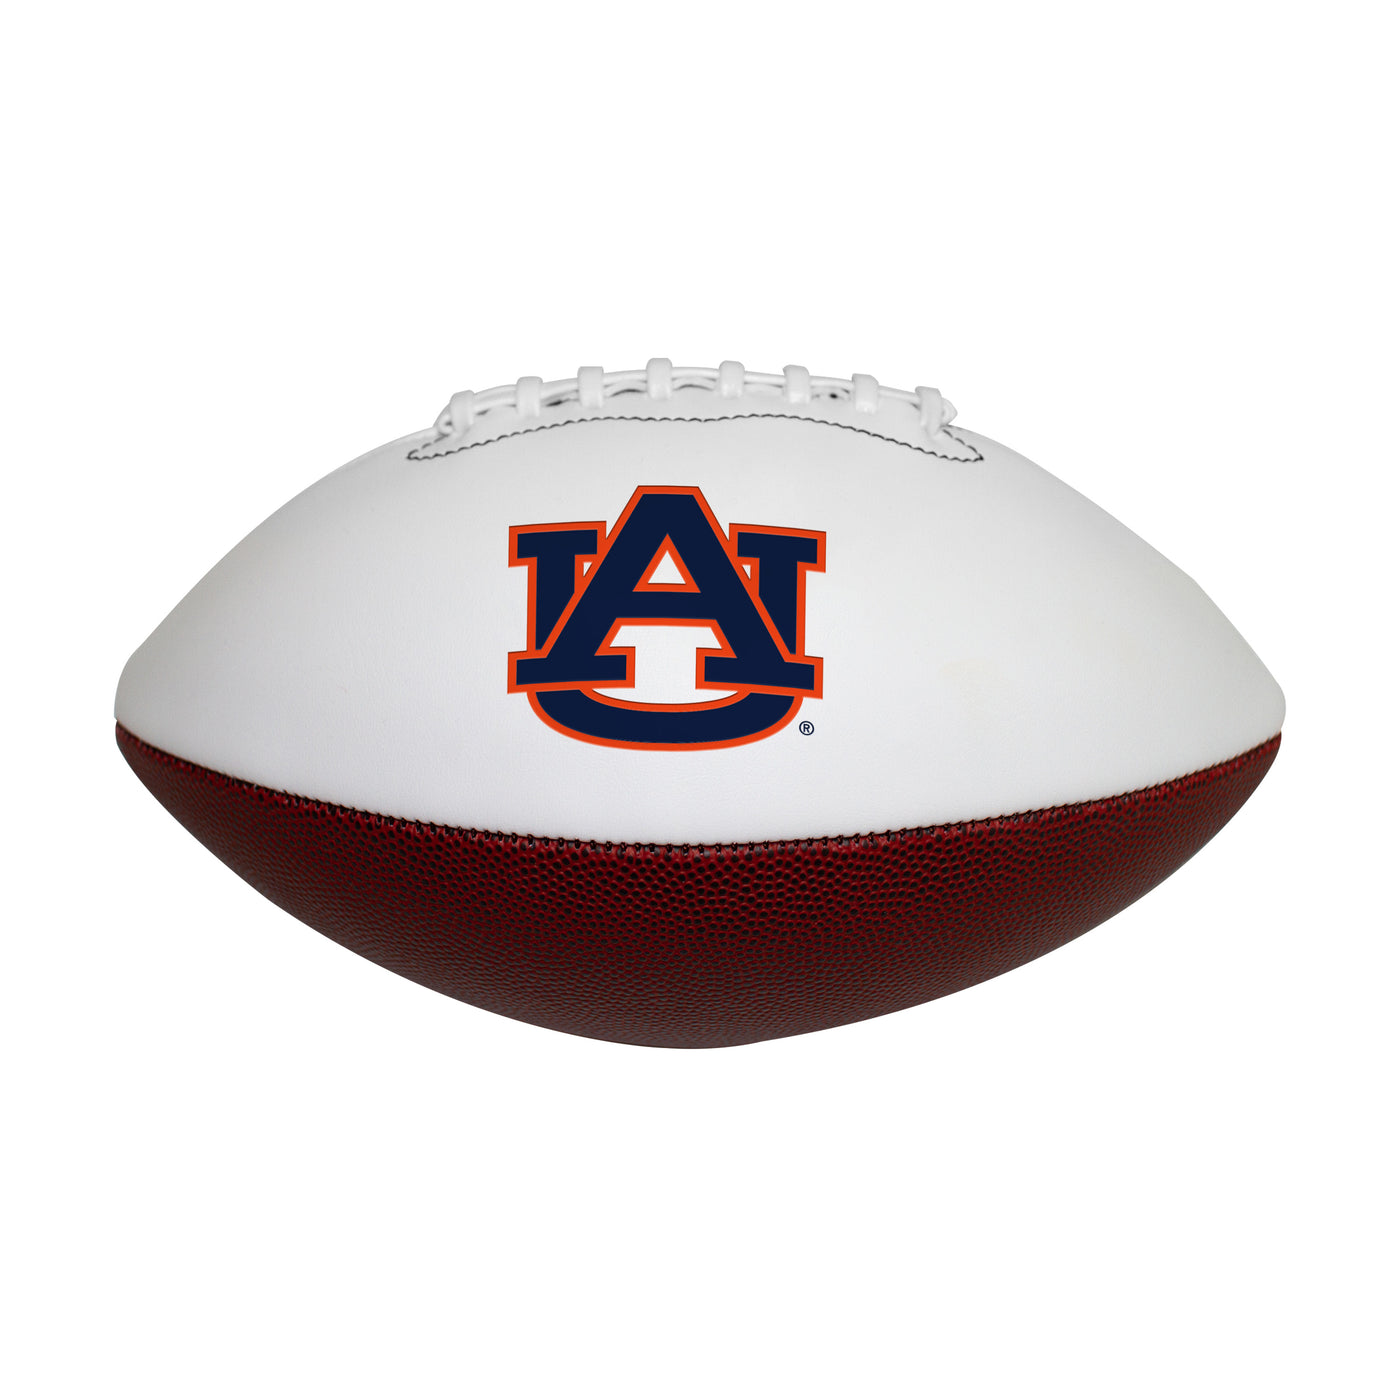 Auburn Official-Size Autograph Football